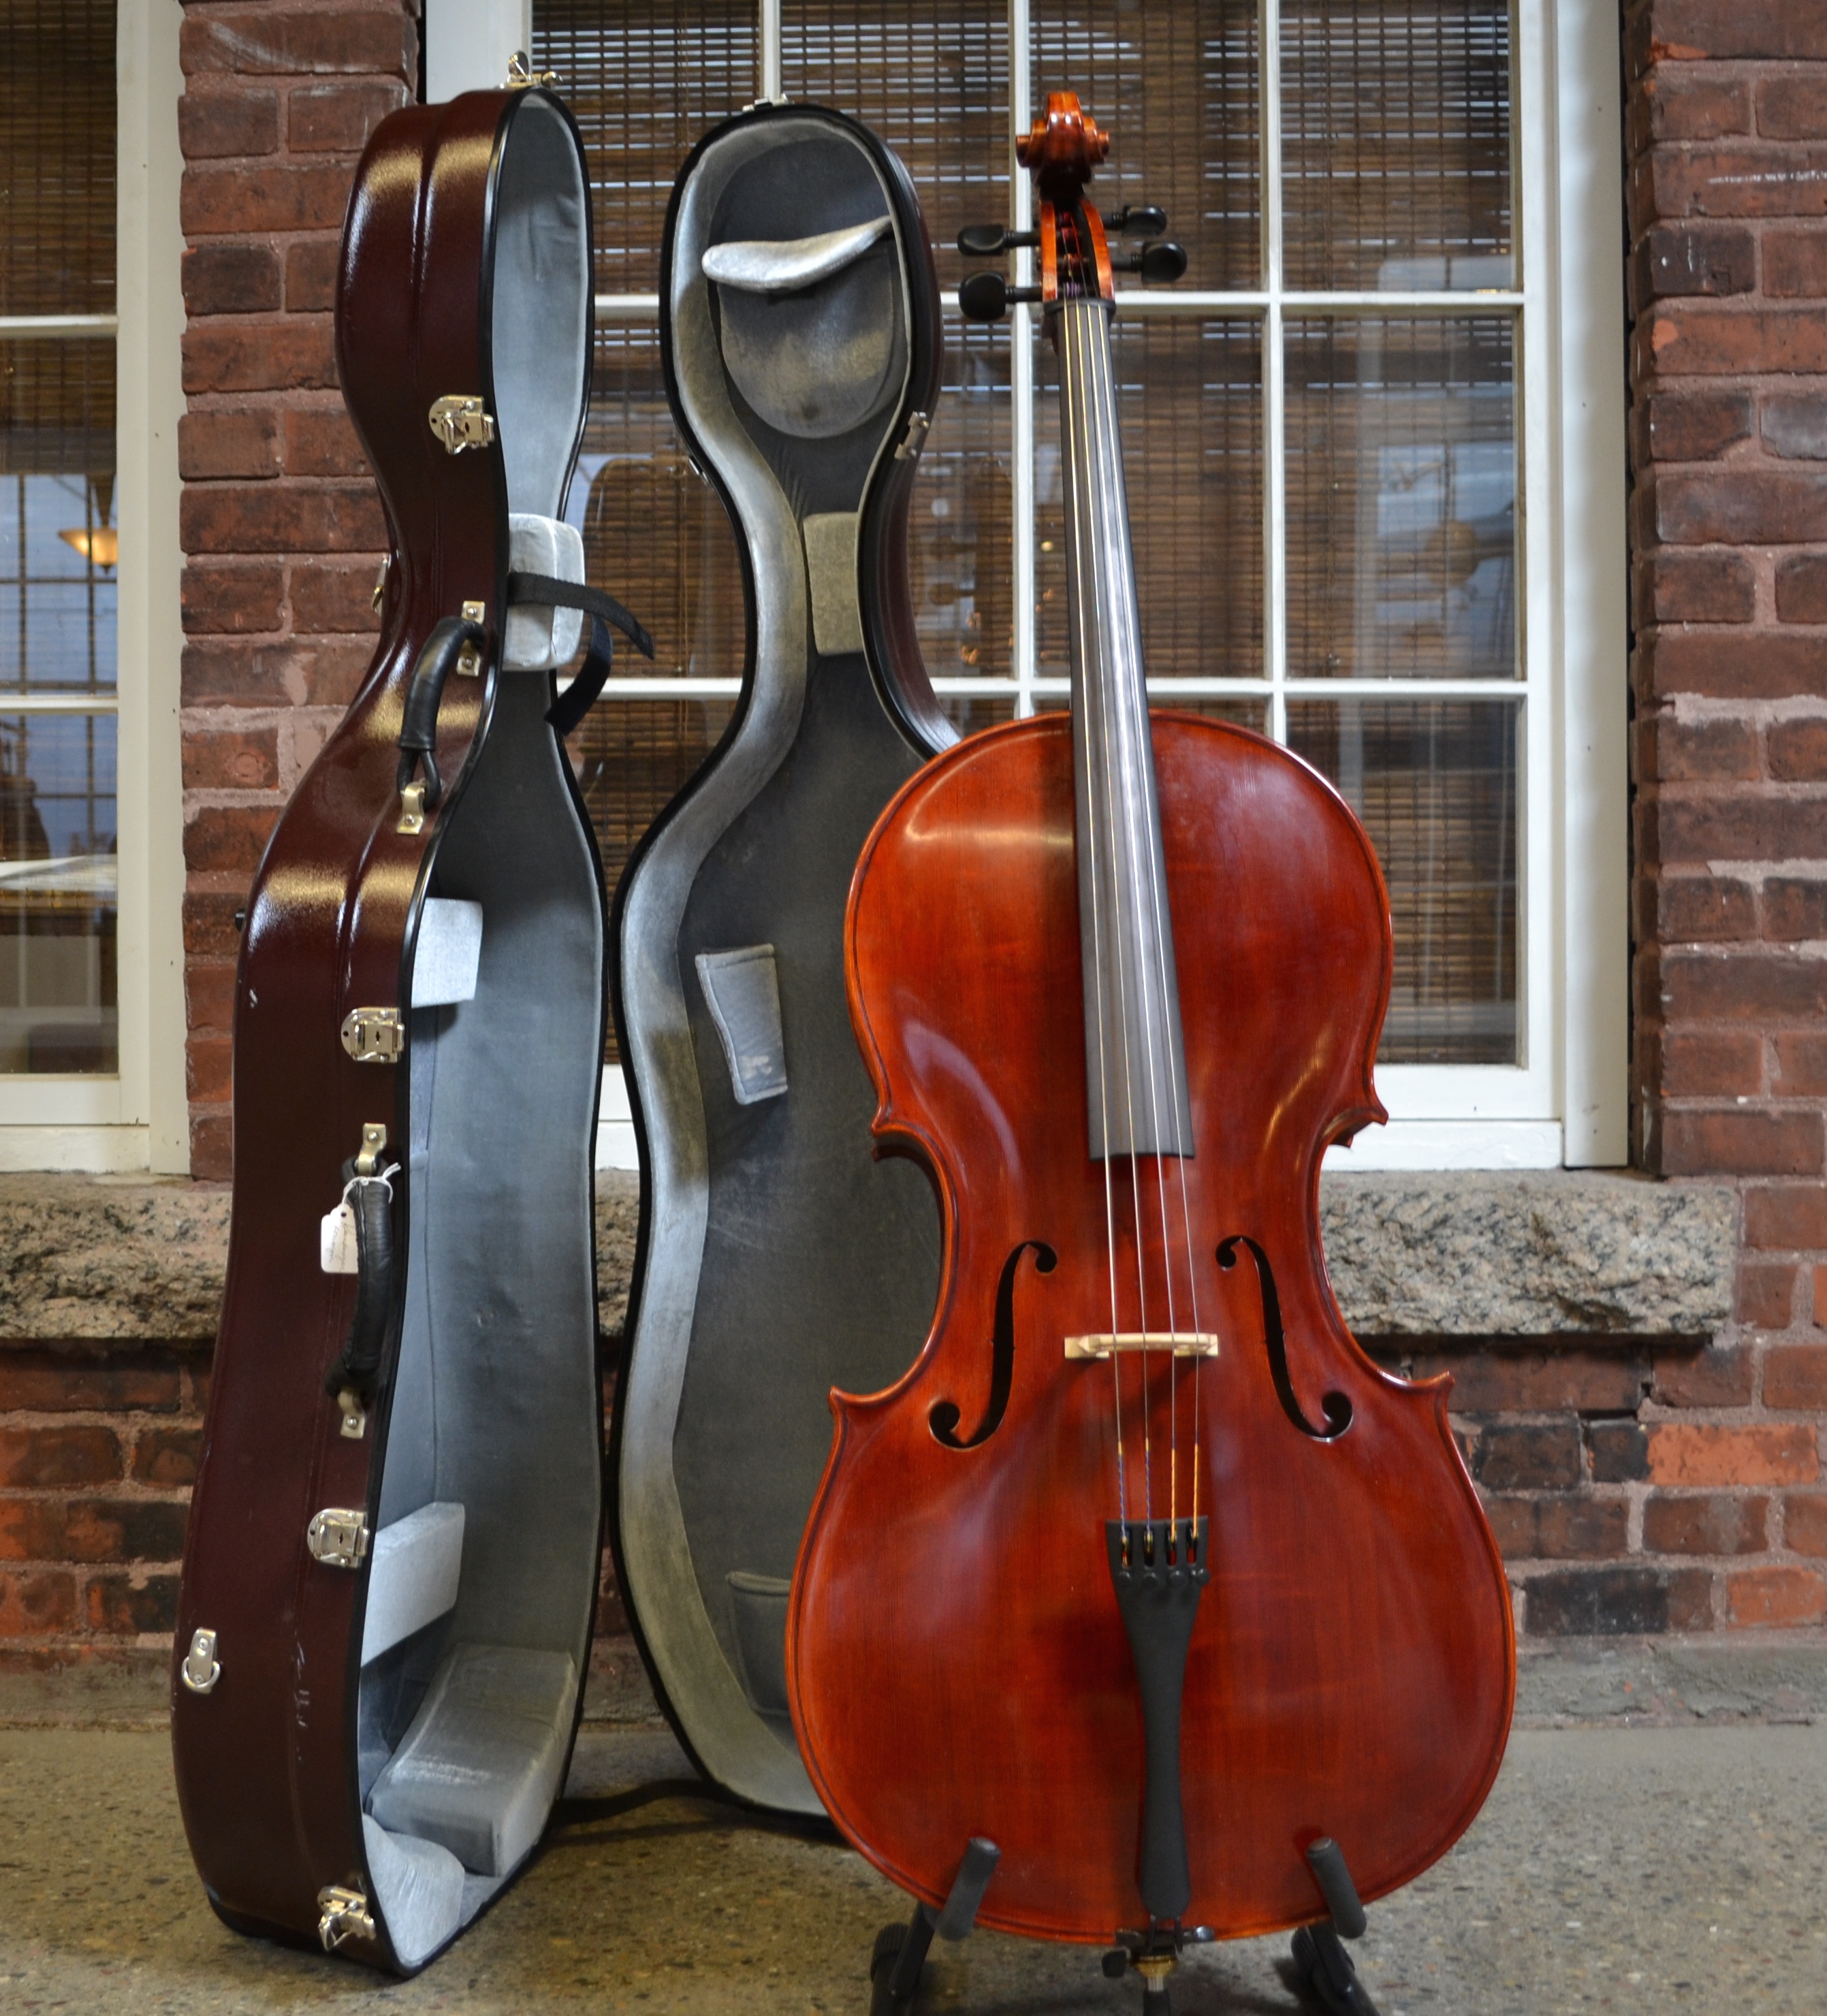 McCarten Violins - Featured Instrument: Soloist Cello by Stringworks!